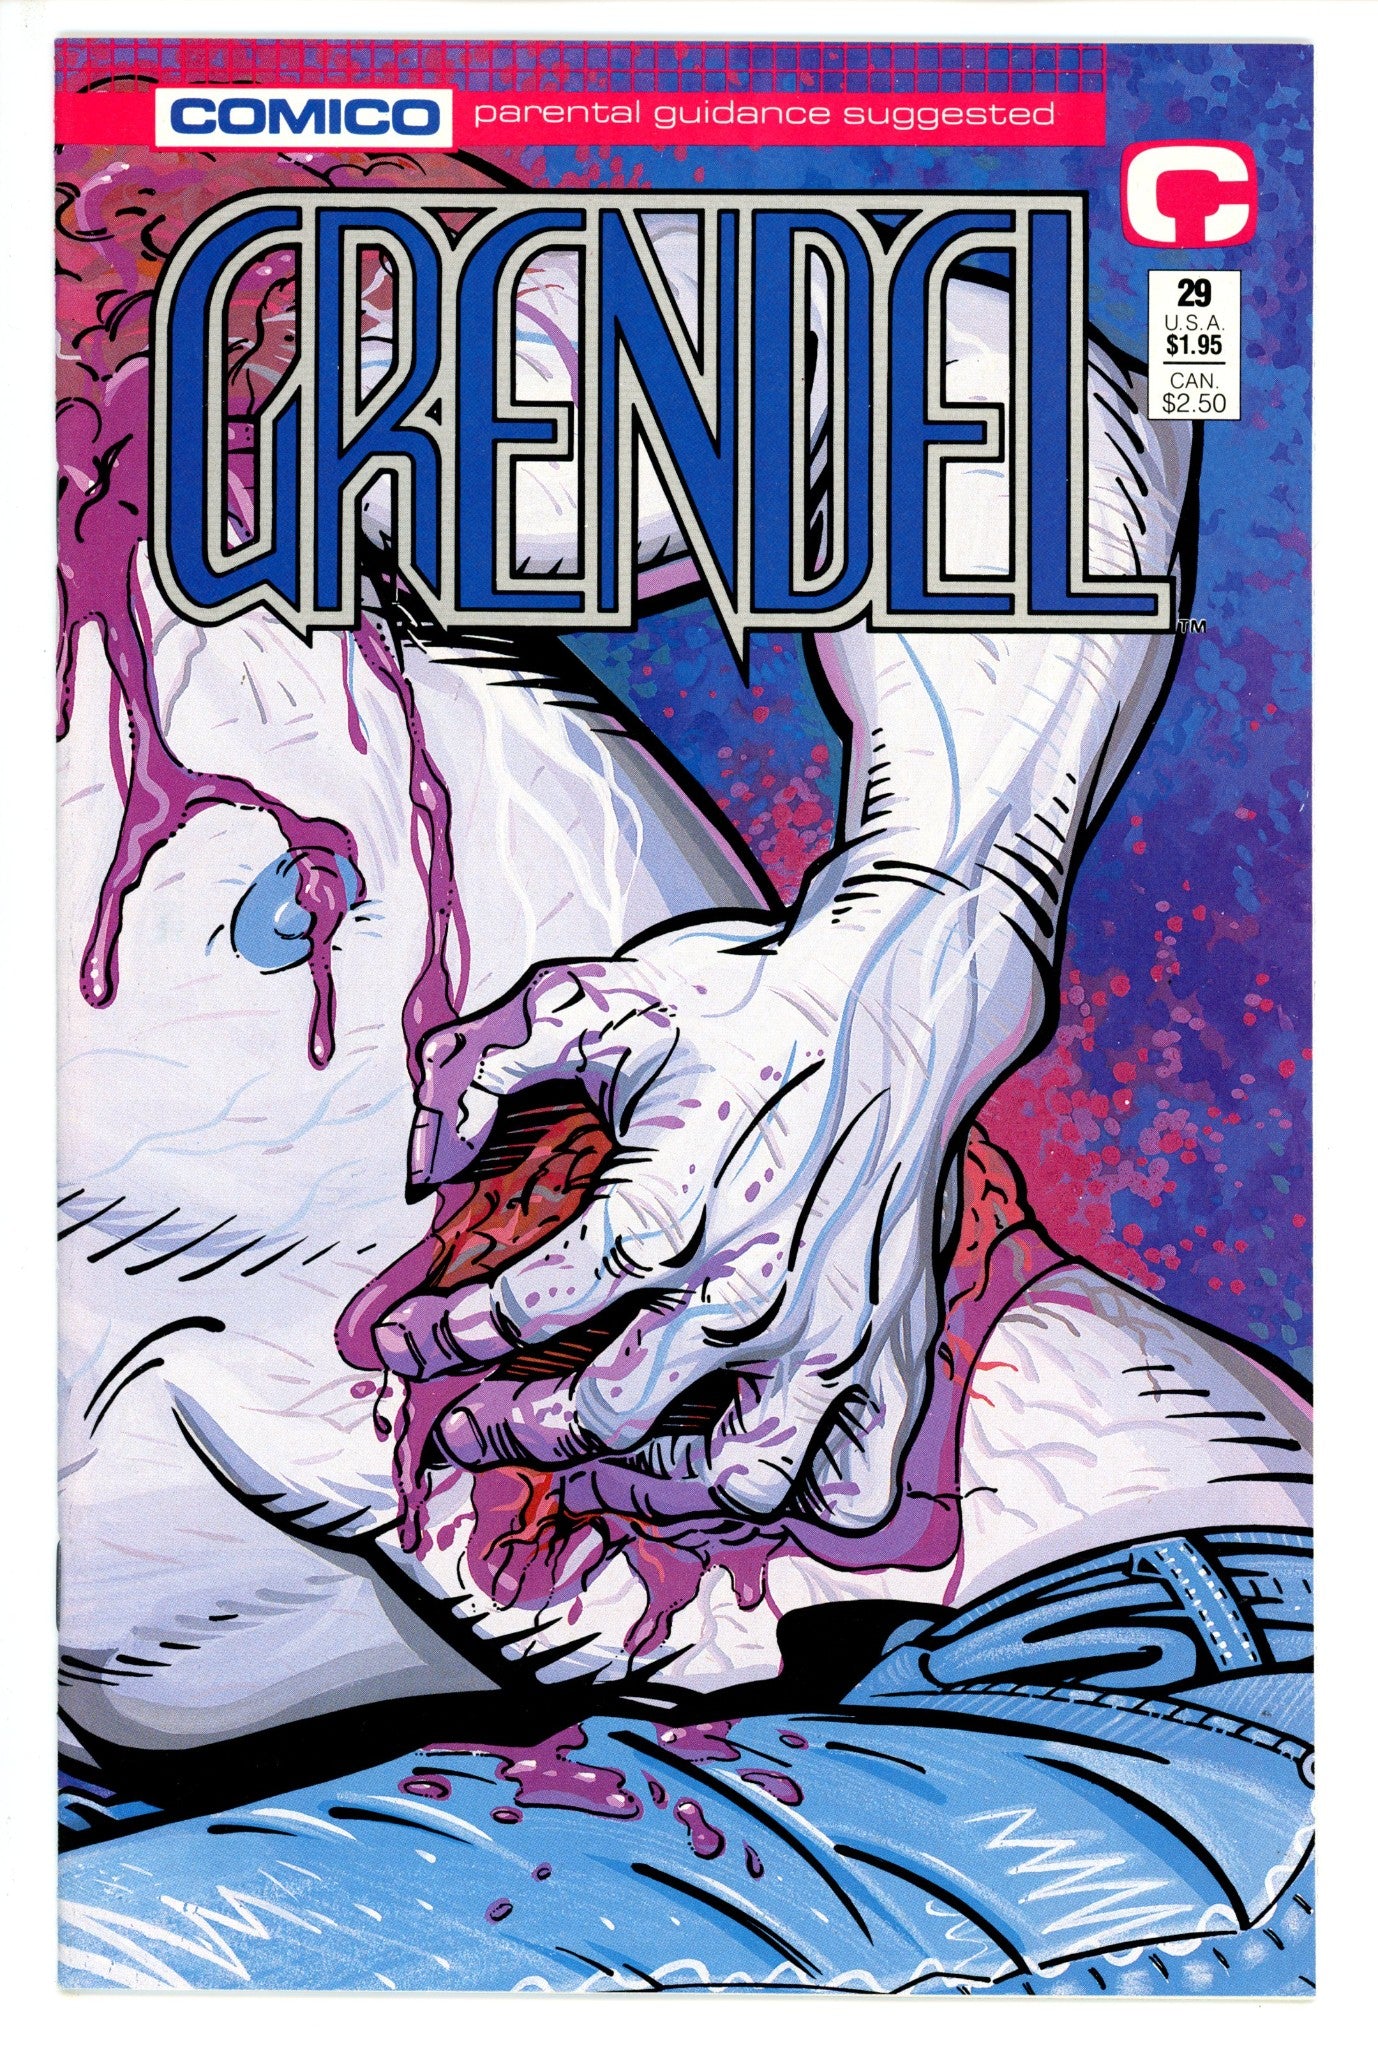 Grendel Vol 2 29 (1989)